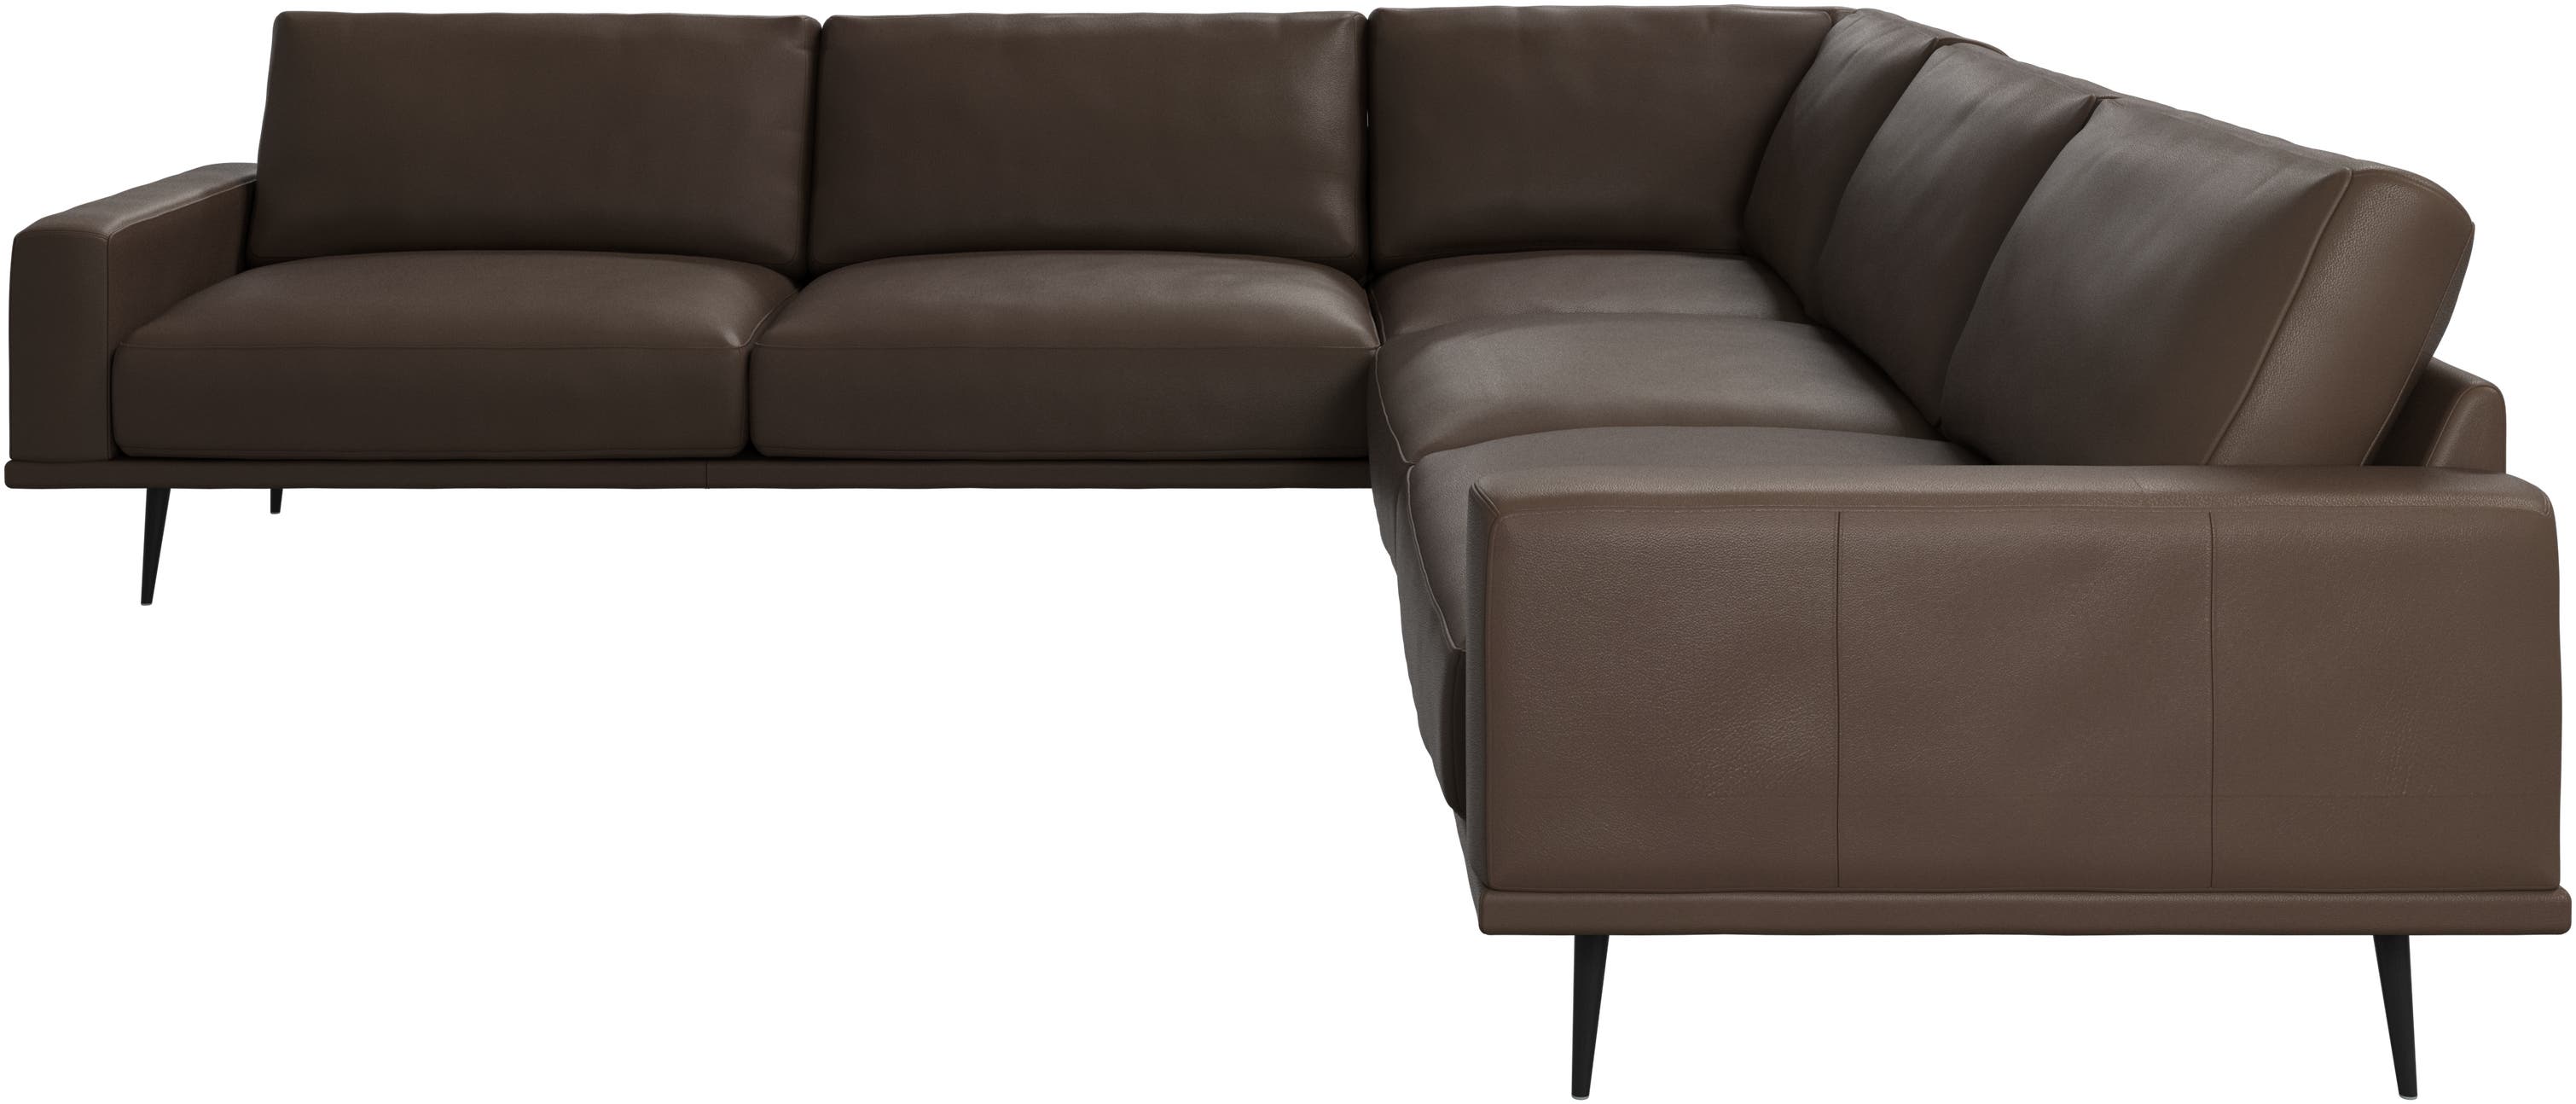 Carlton corner sofa